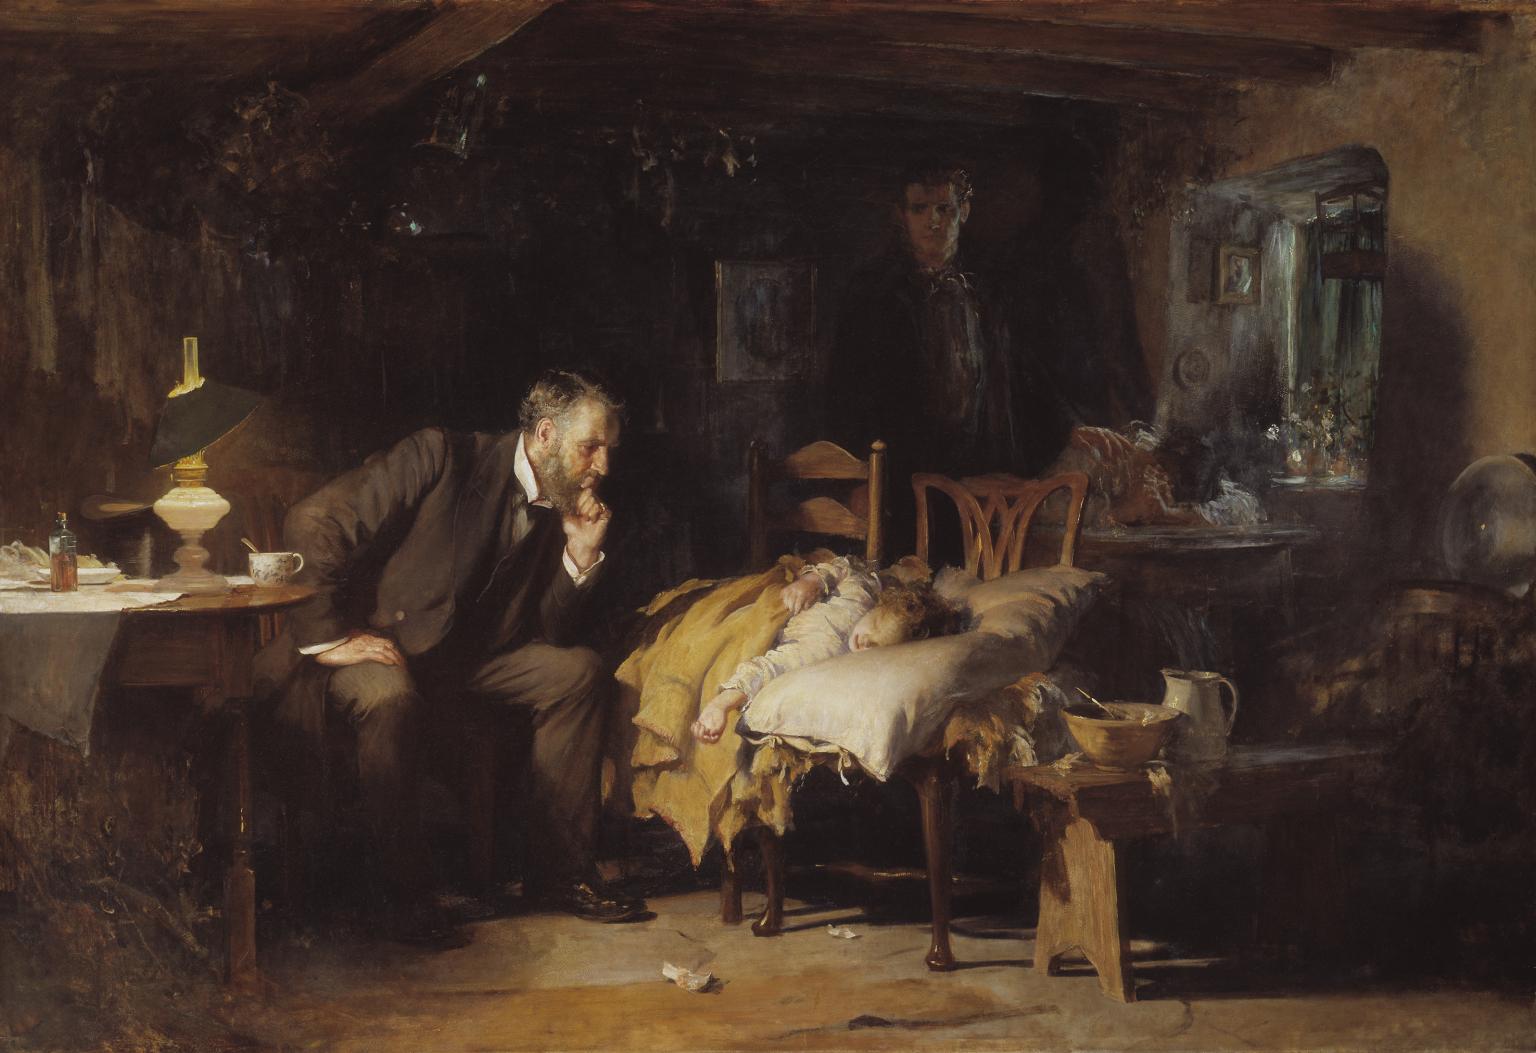 Sir Luke Fildes, "The Doctor"